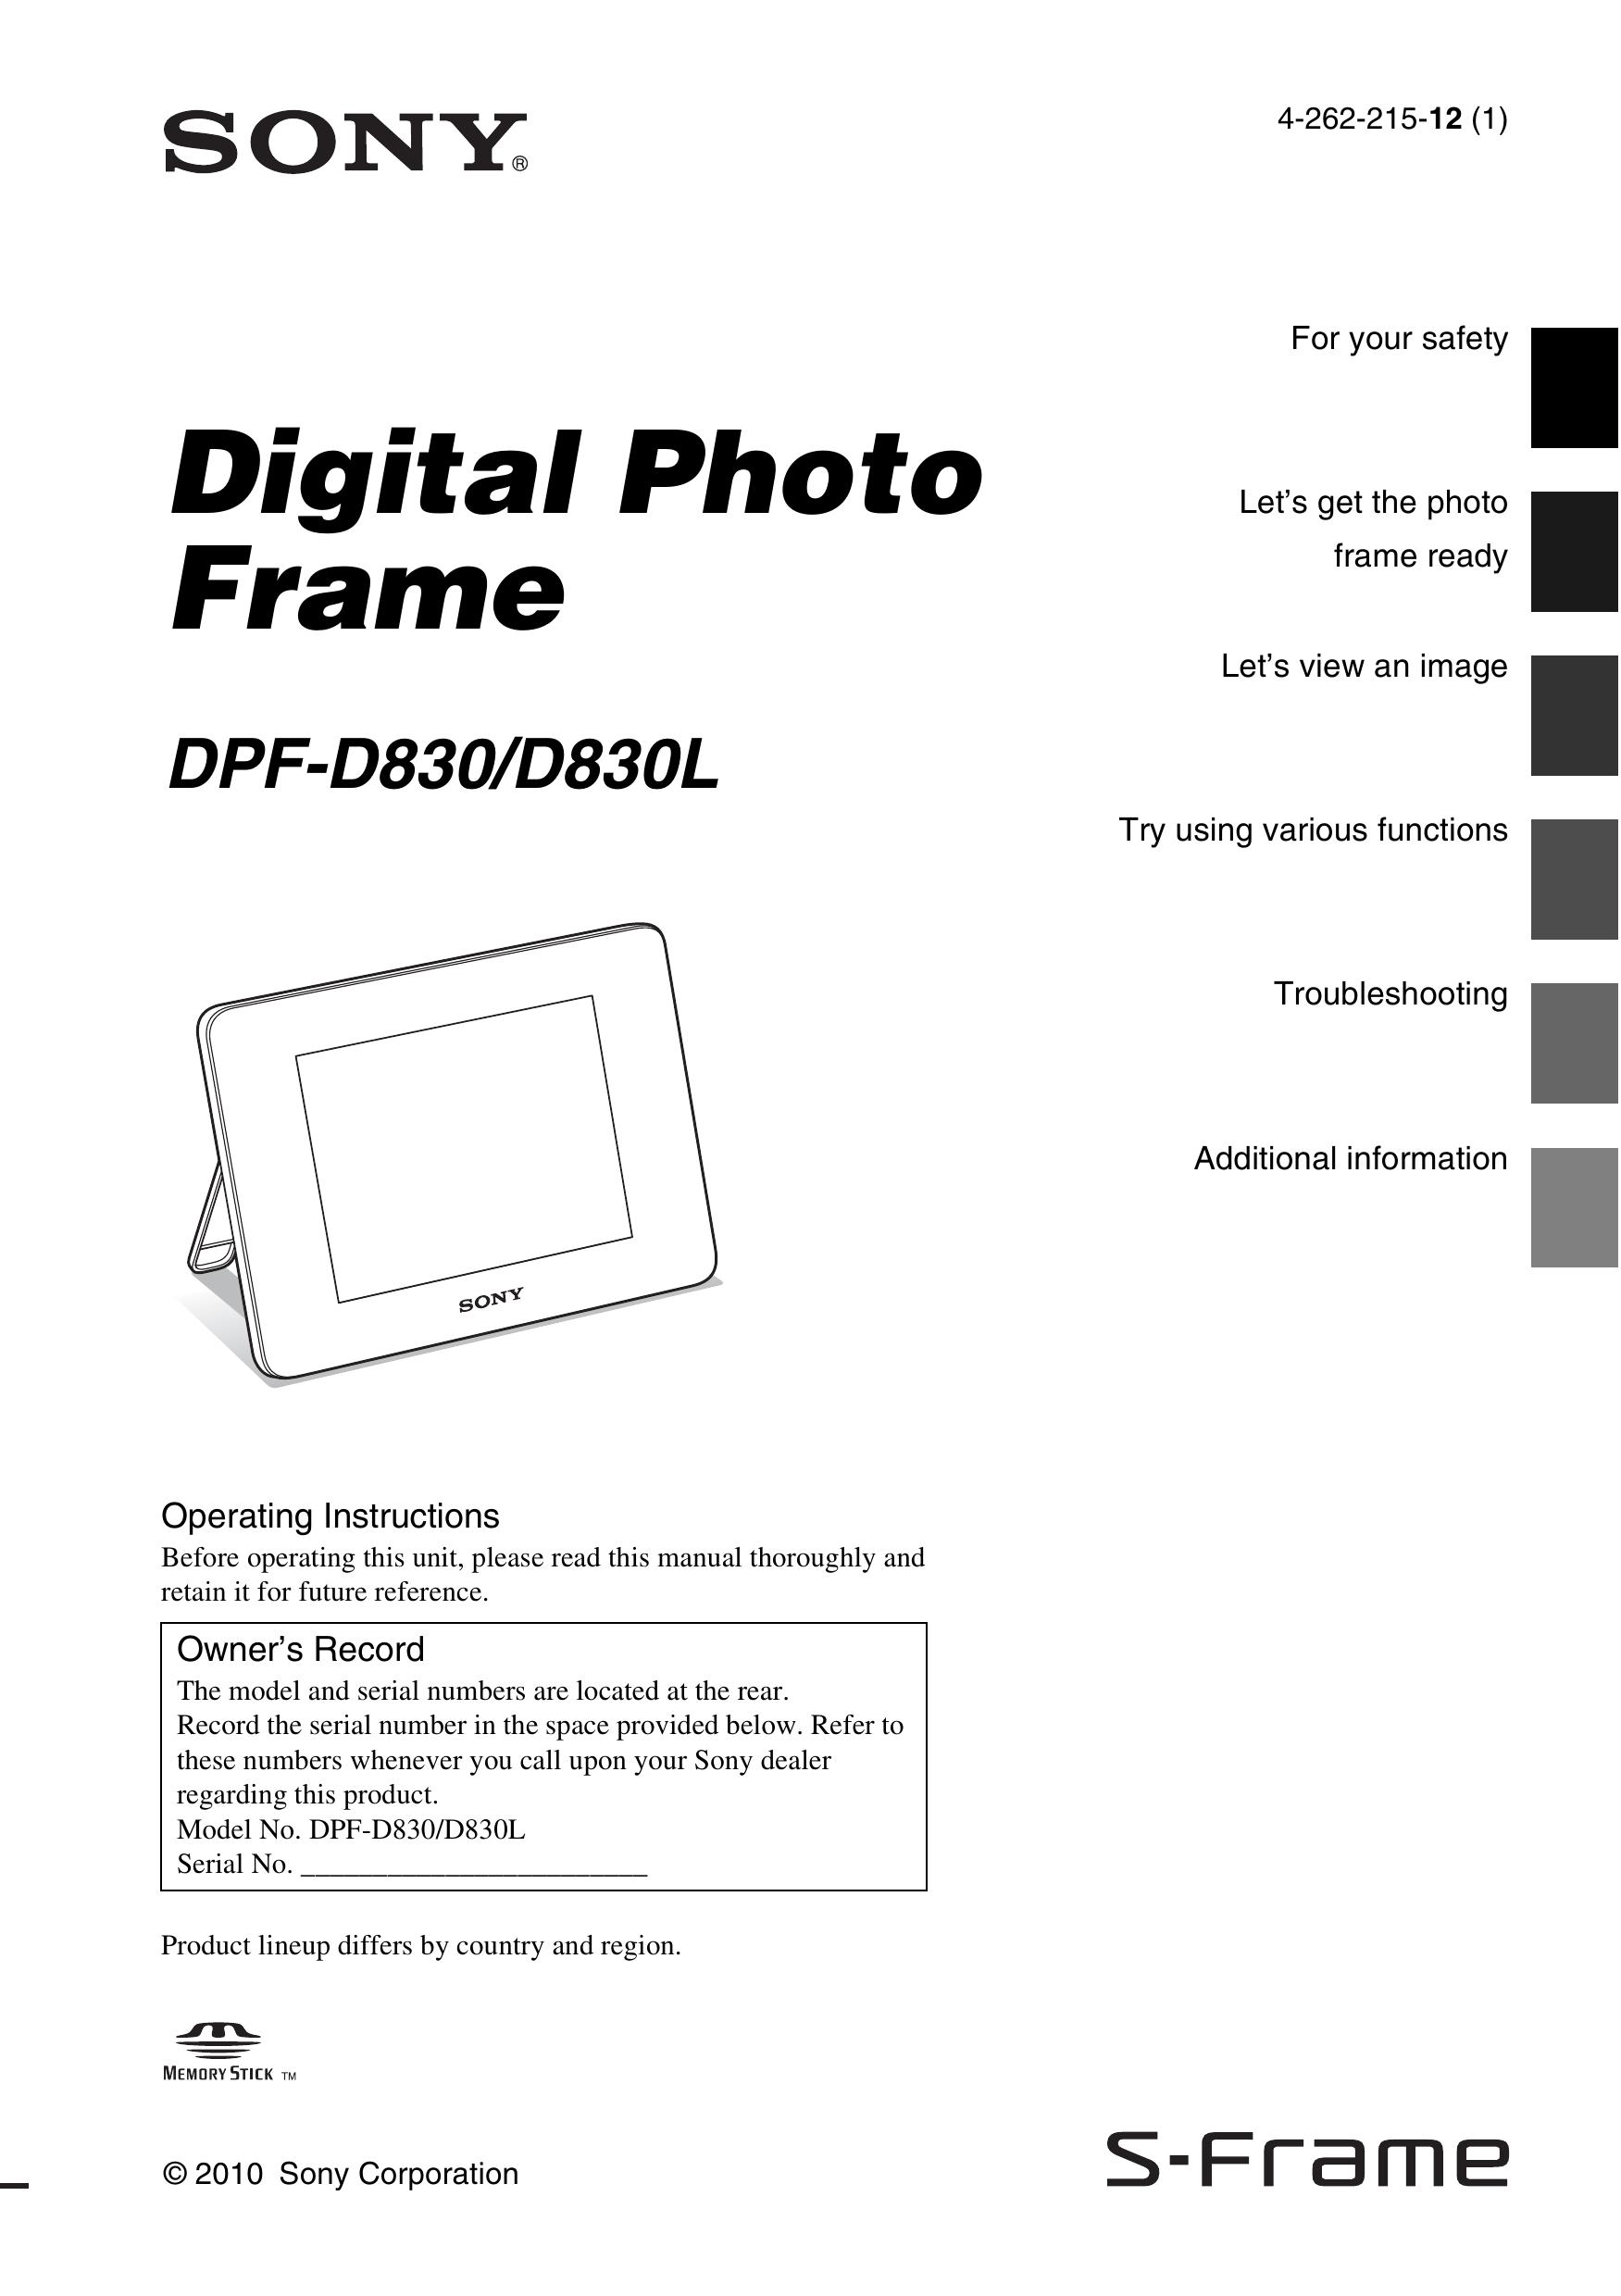 Sony 4-262-215-12 (1) Digital Photo Frame User Manual